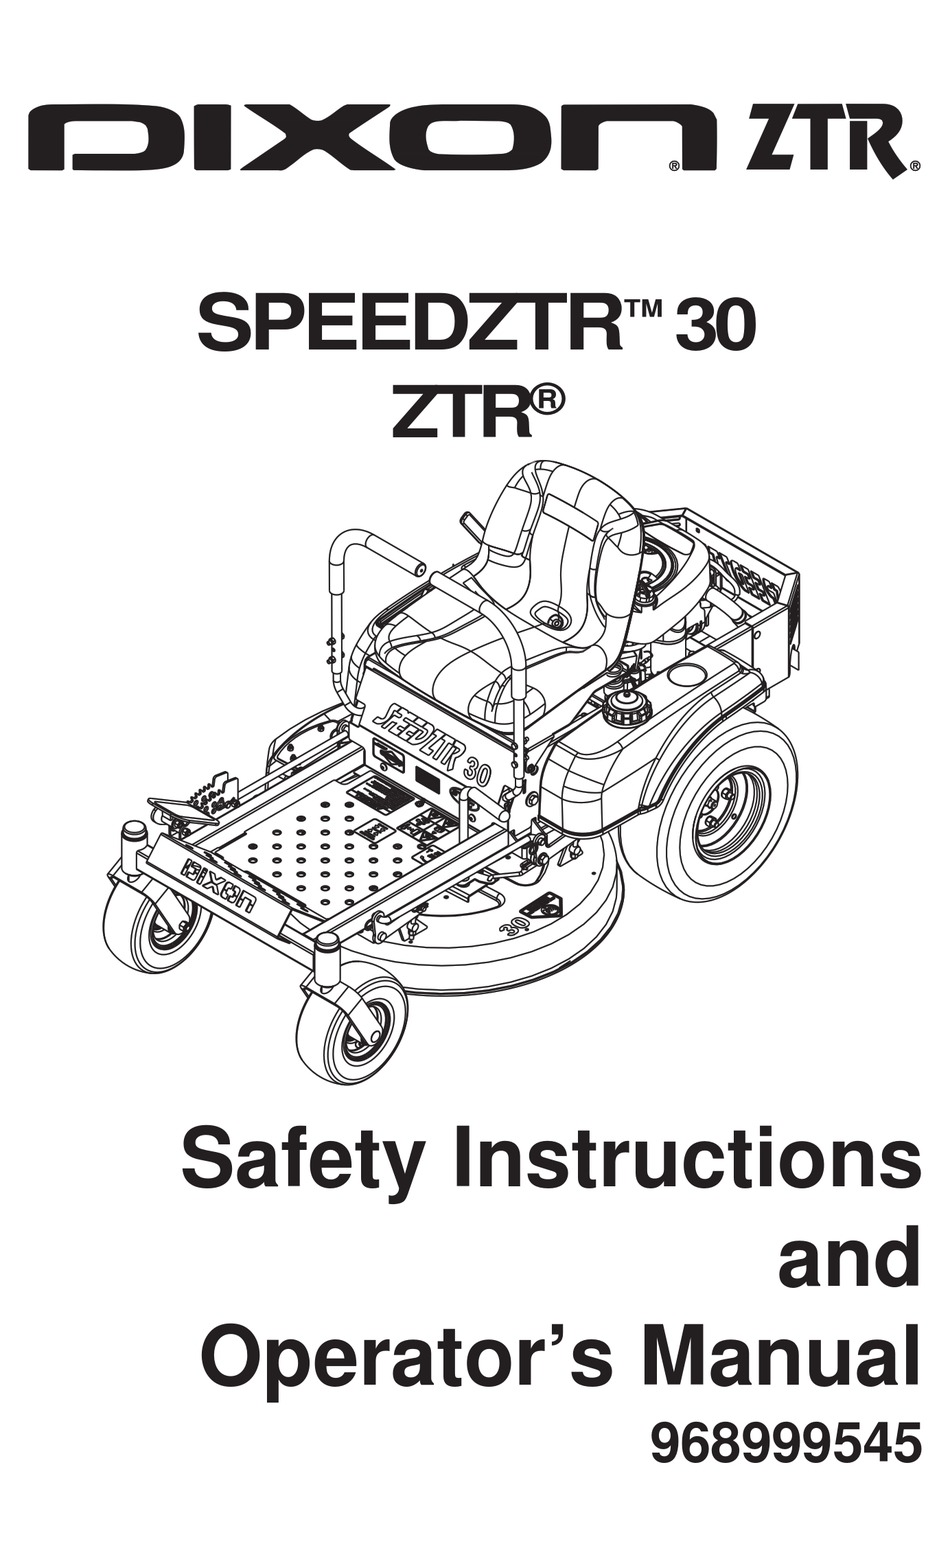 Dixon Speedztr 30 Safety And Operation Manual Pdf Download Manualslib